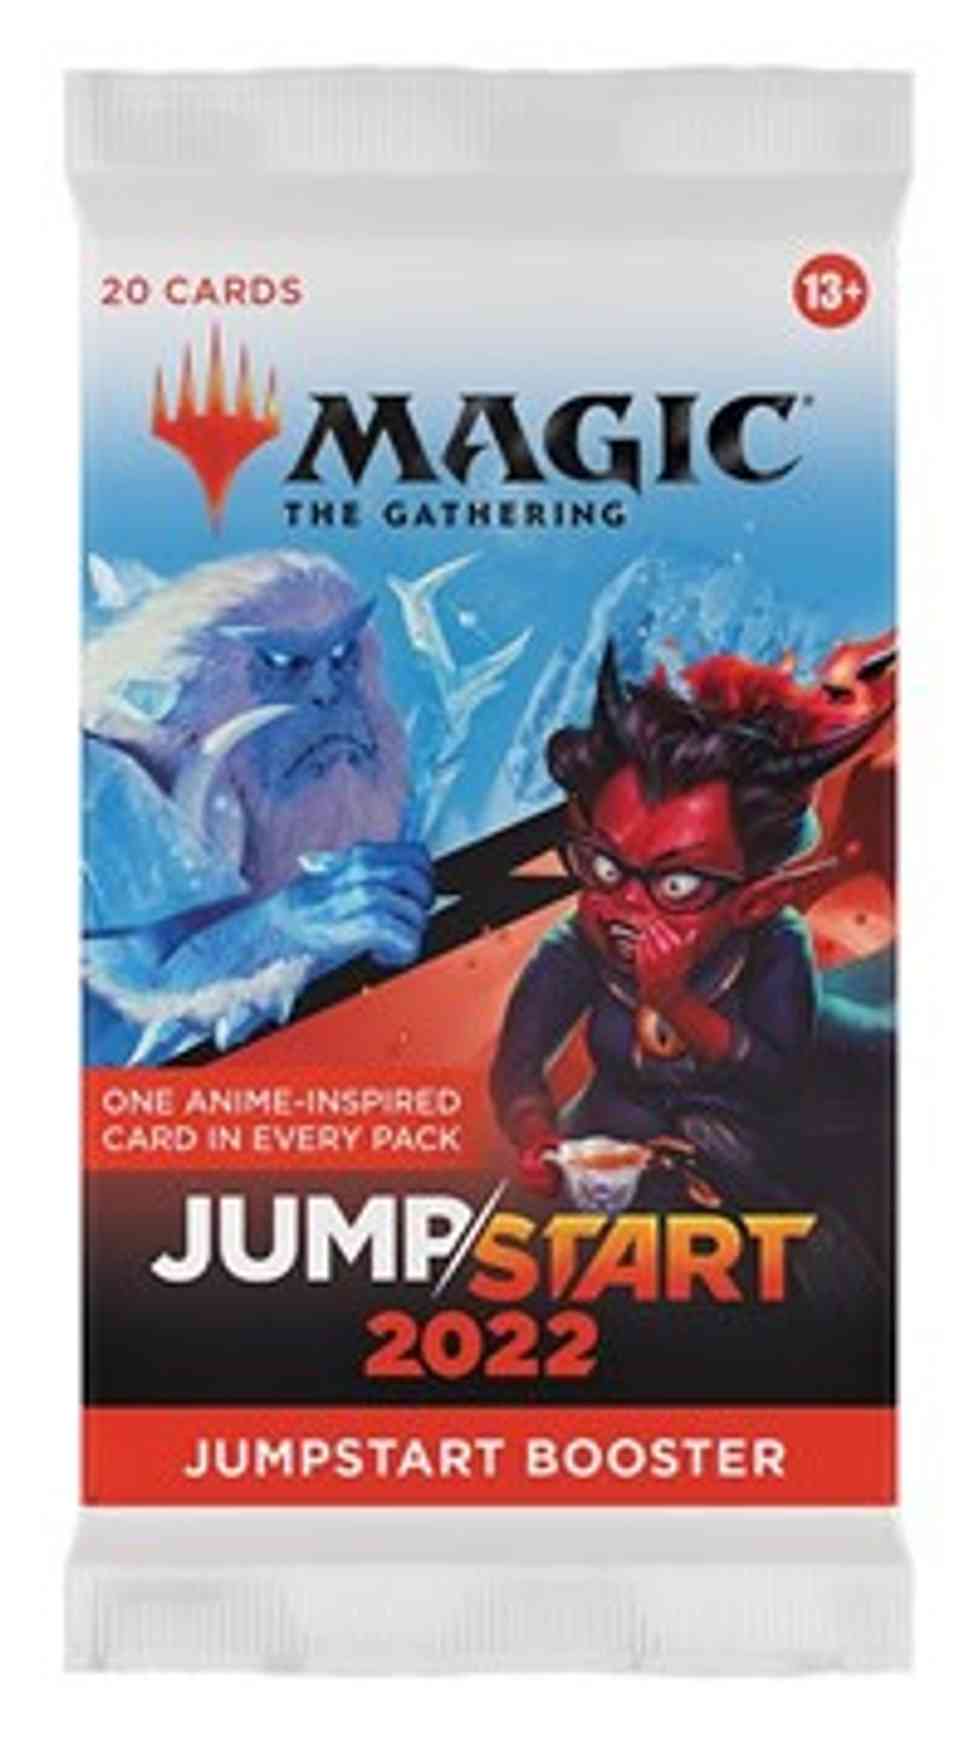 Jumpstart 2022 Booster Pack magic card front